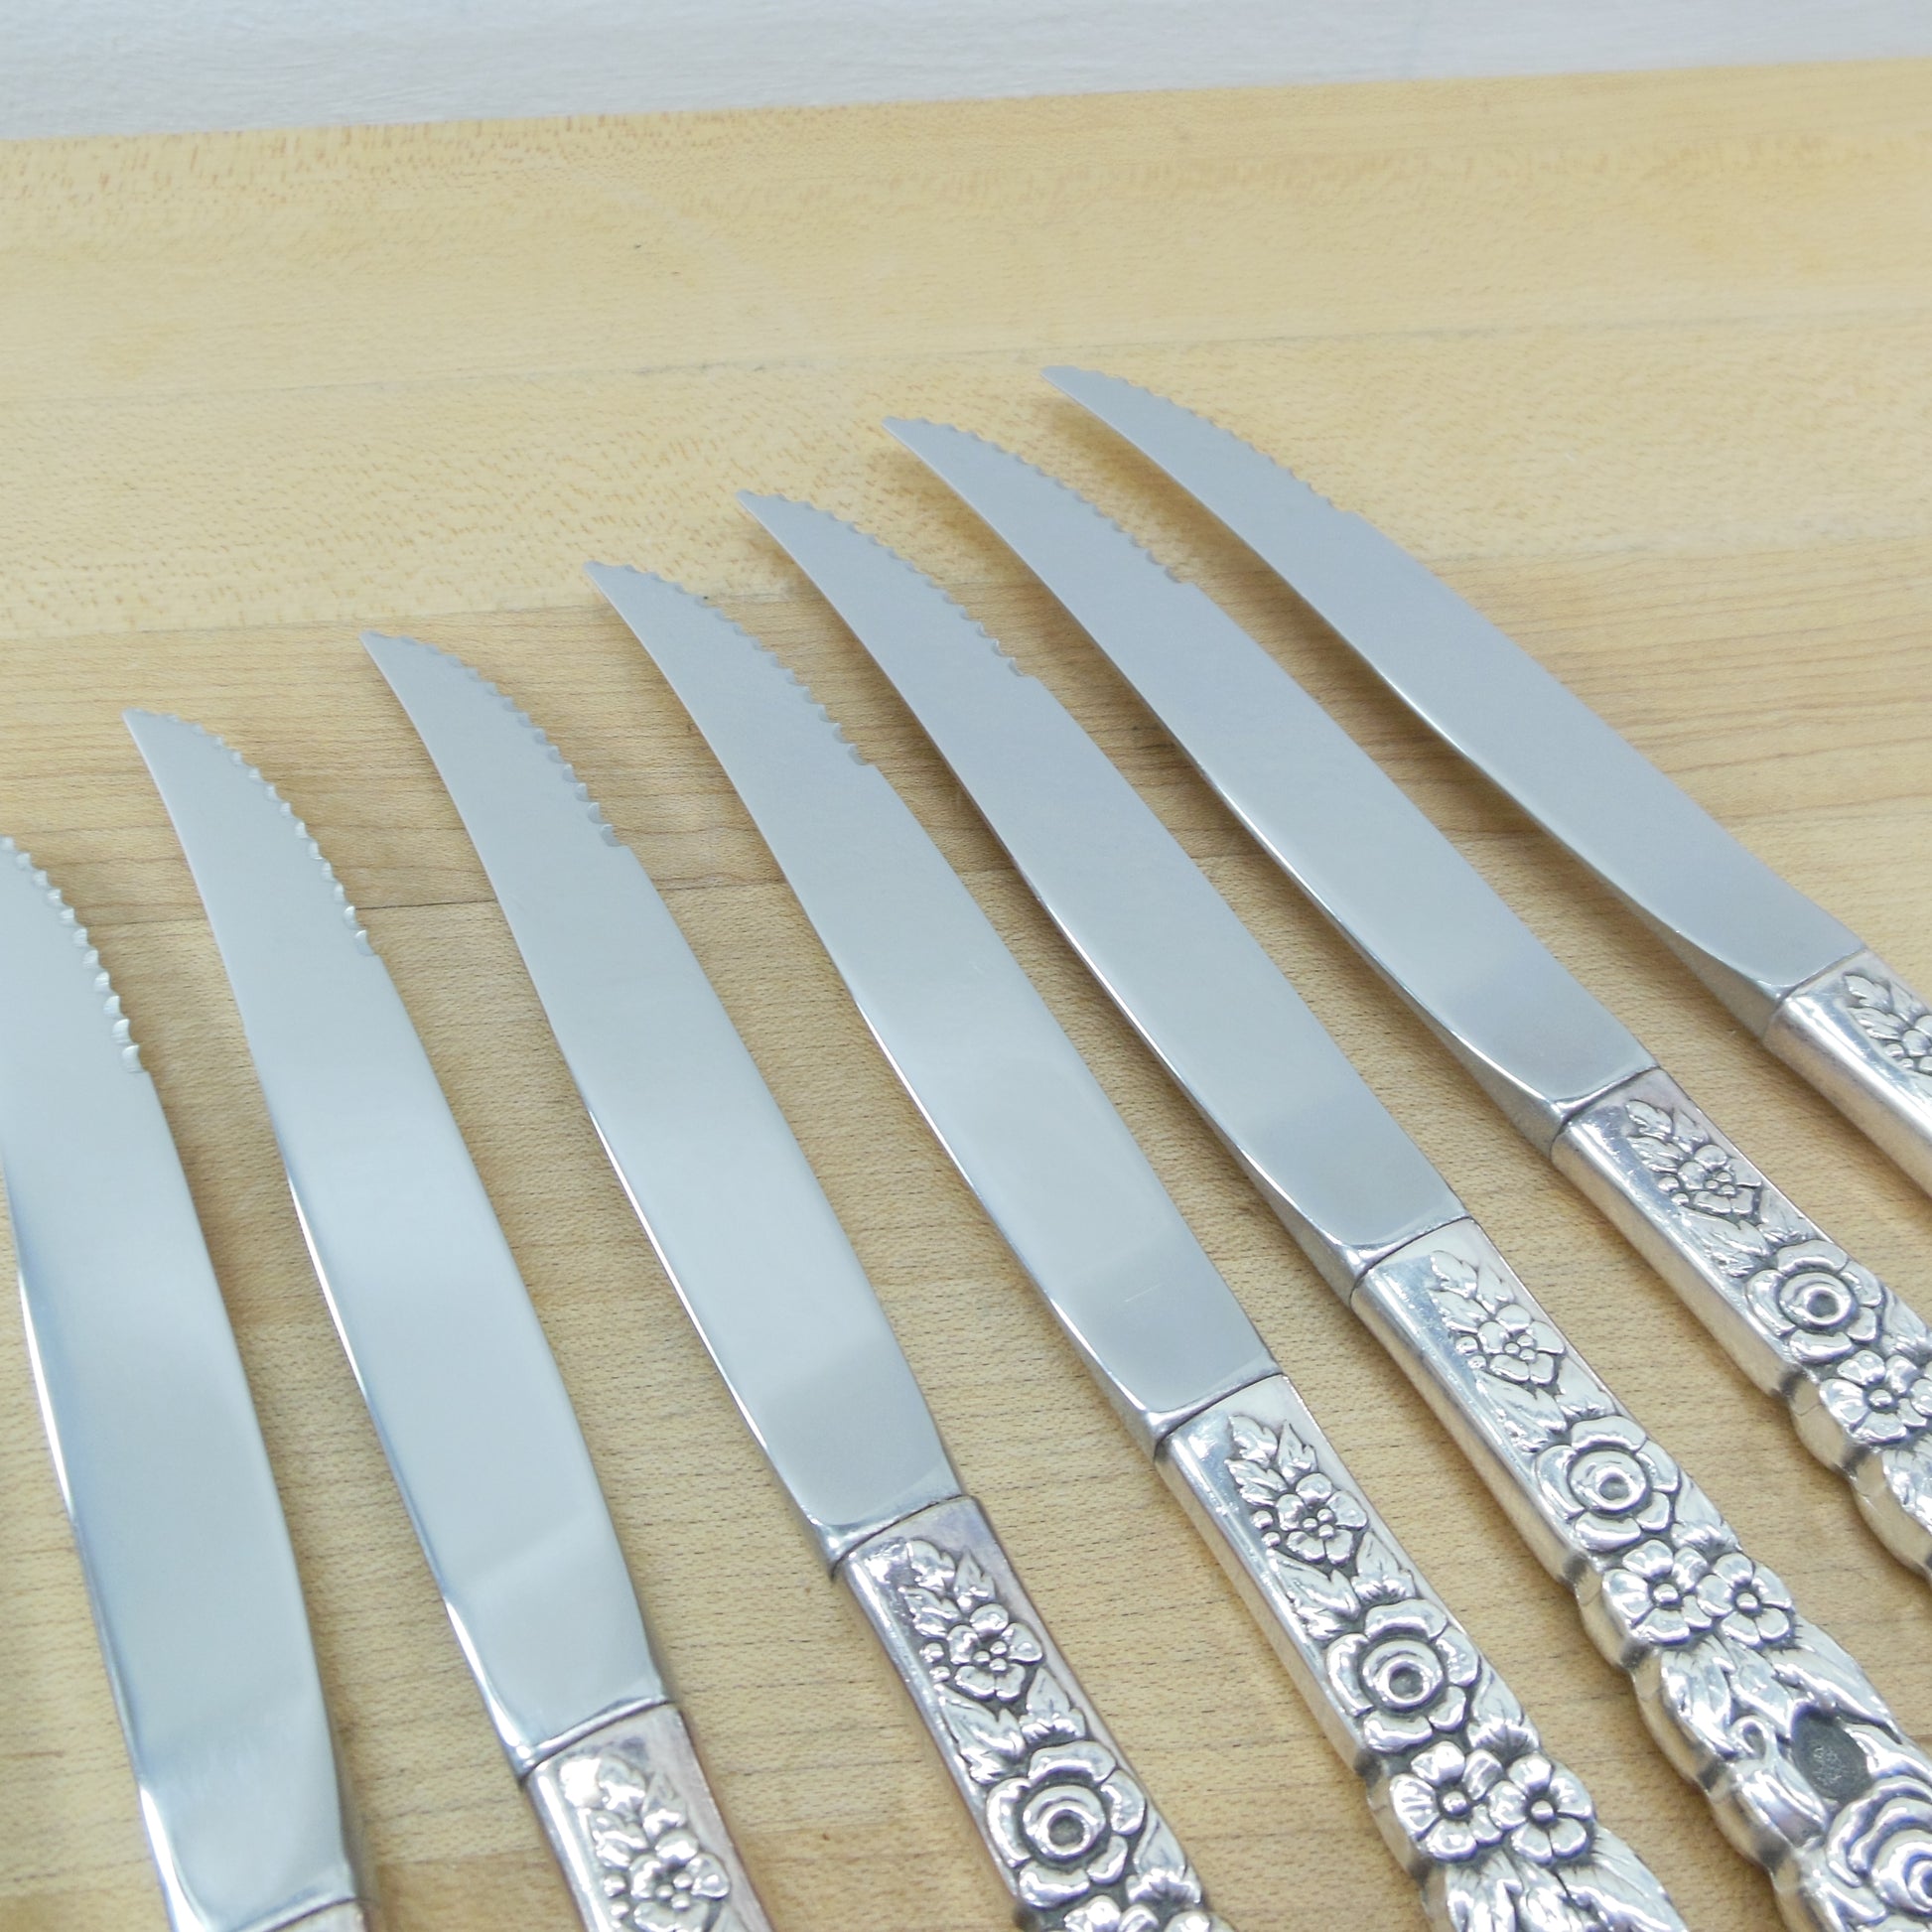 Oneida Aero Set of 8 Steak Knives